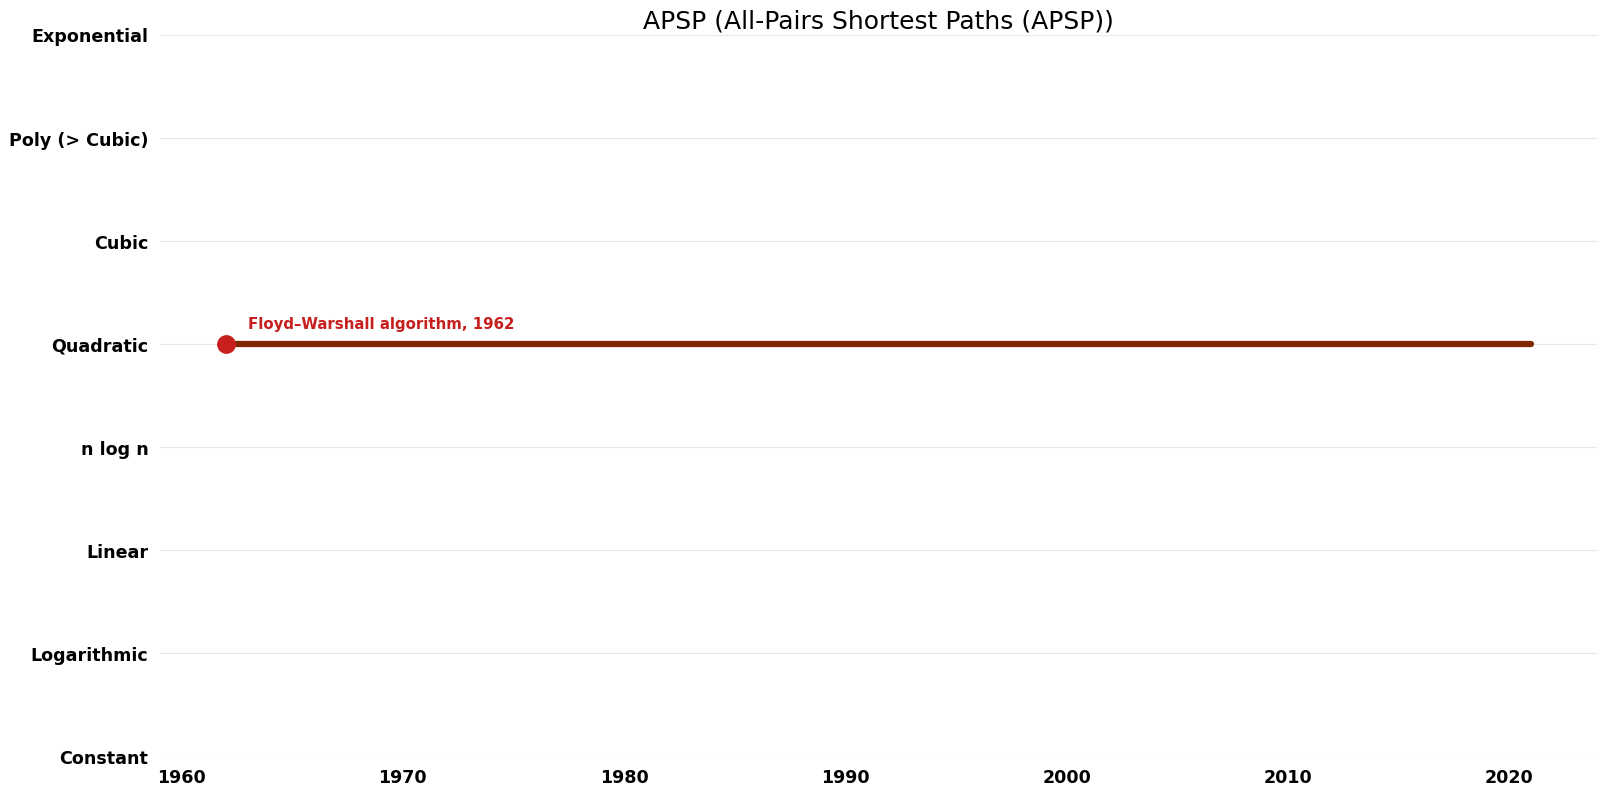 All-Pairs Shortest Paths (APSP) - APSP - Space.png